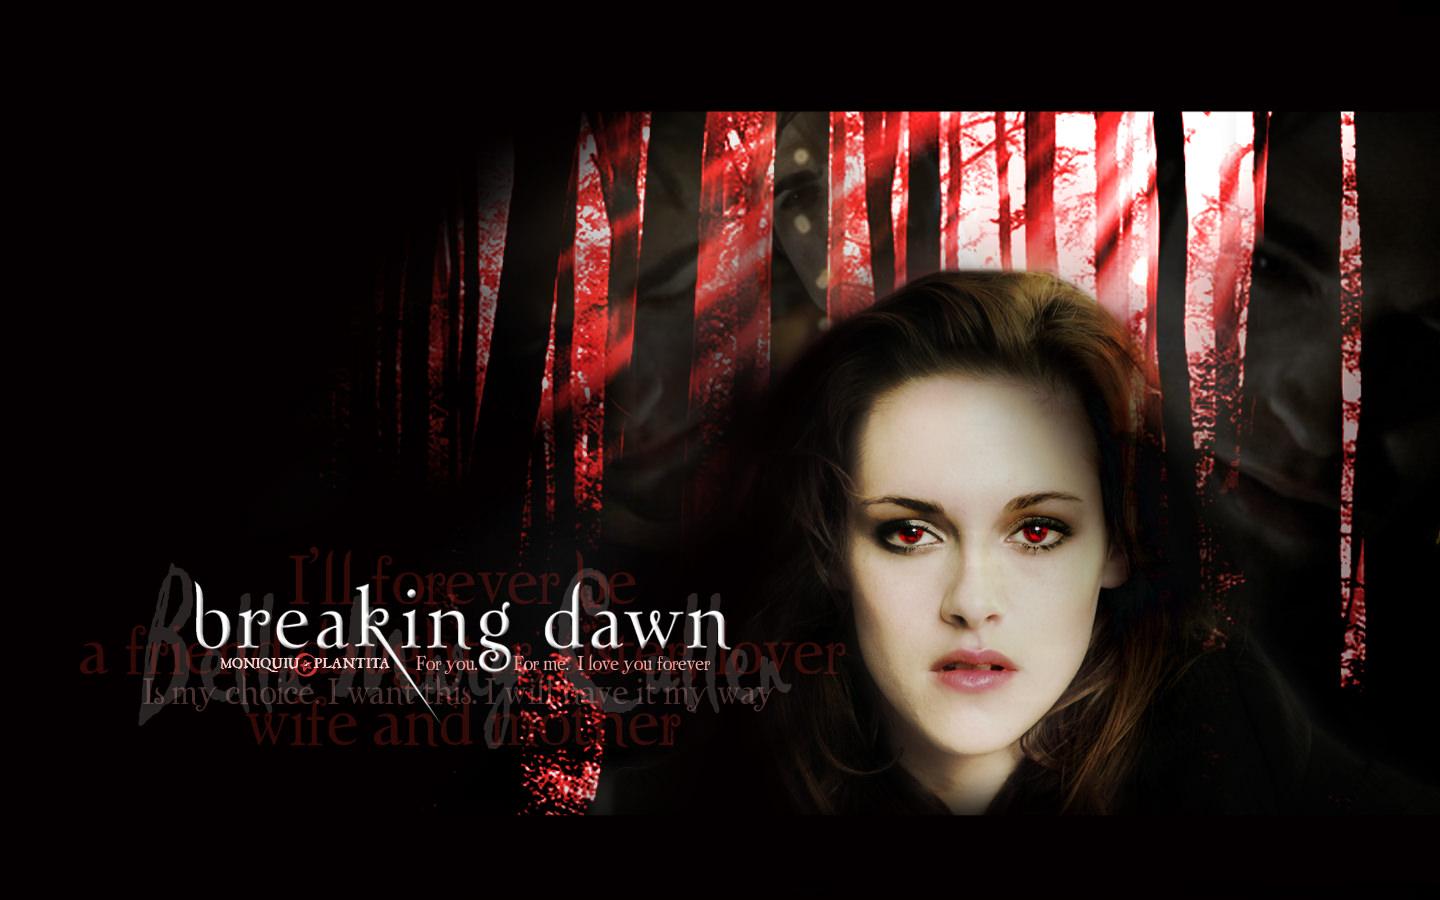 Twilight Breaking Dawn 2 wallpaper from Twilight series wallpaper